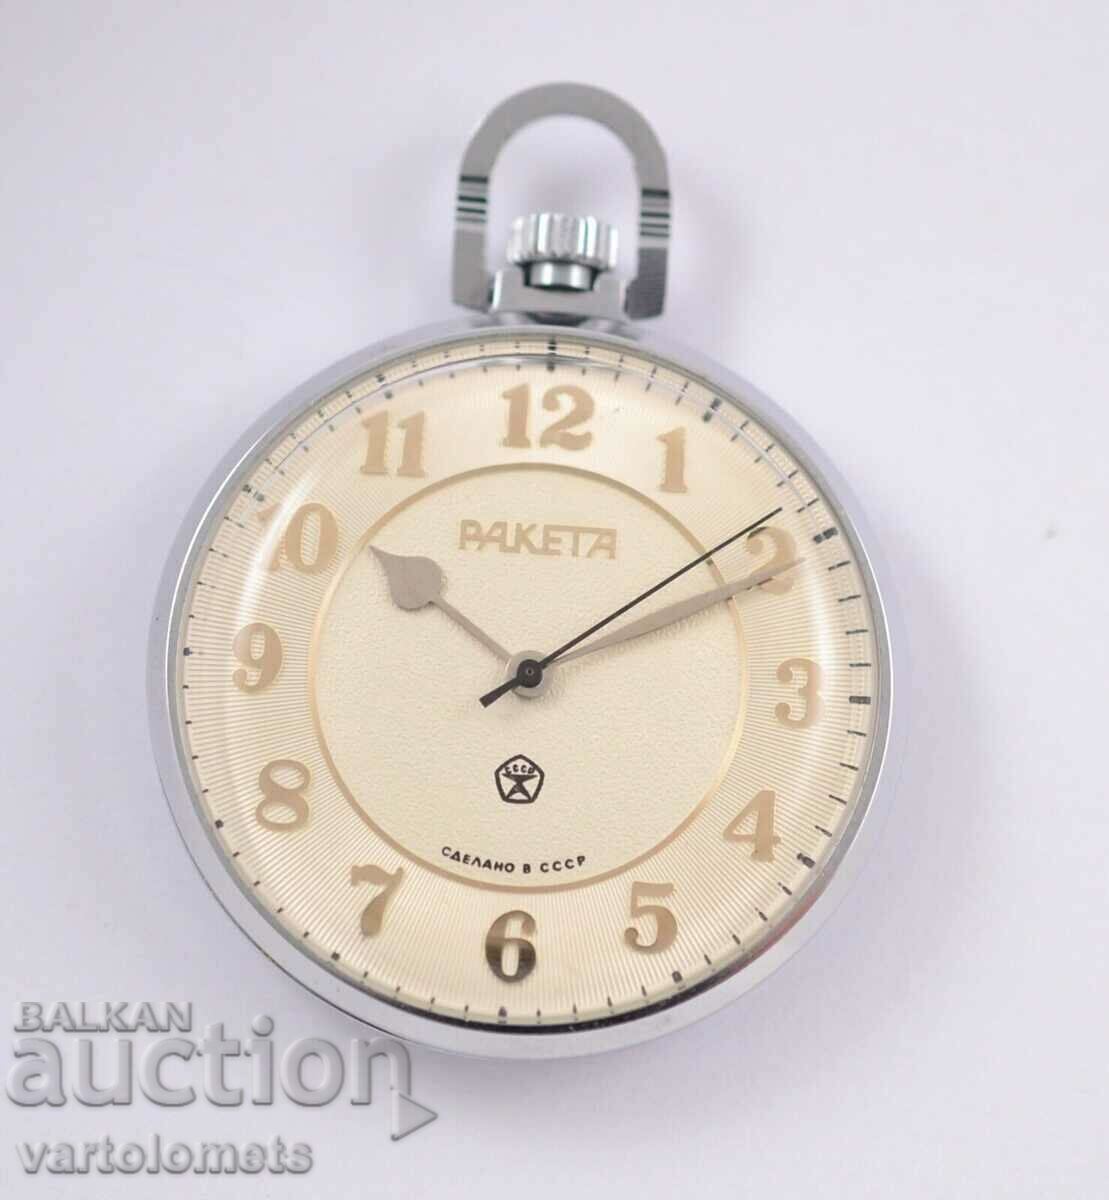 RAKETA USSR pocket watch - works